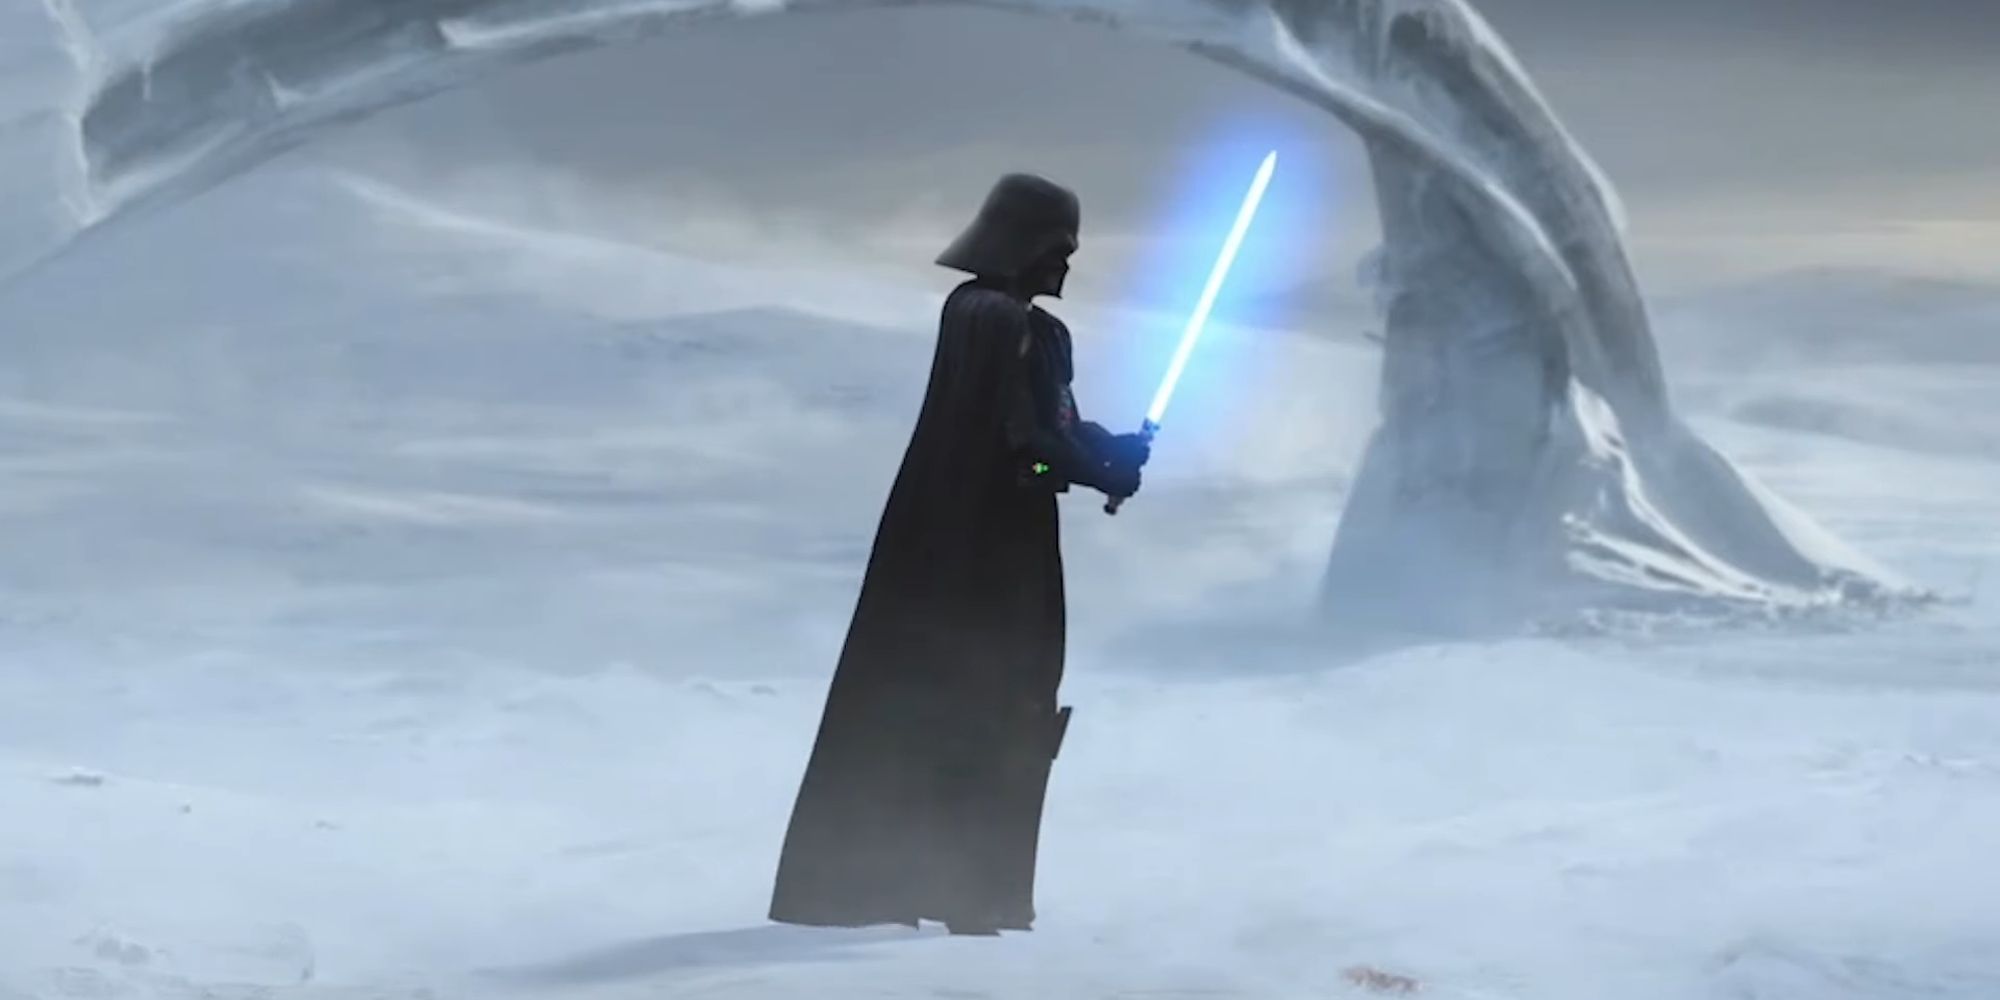 Darth Vader wielding Ahsoka Tano's lightsaber in Star Wars The Clone Wars